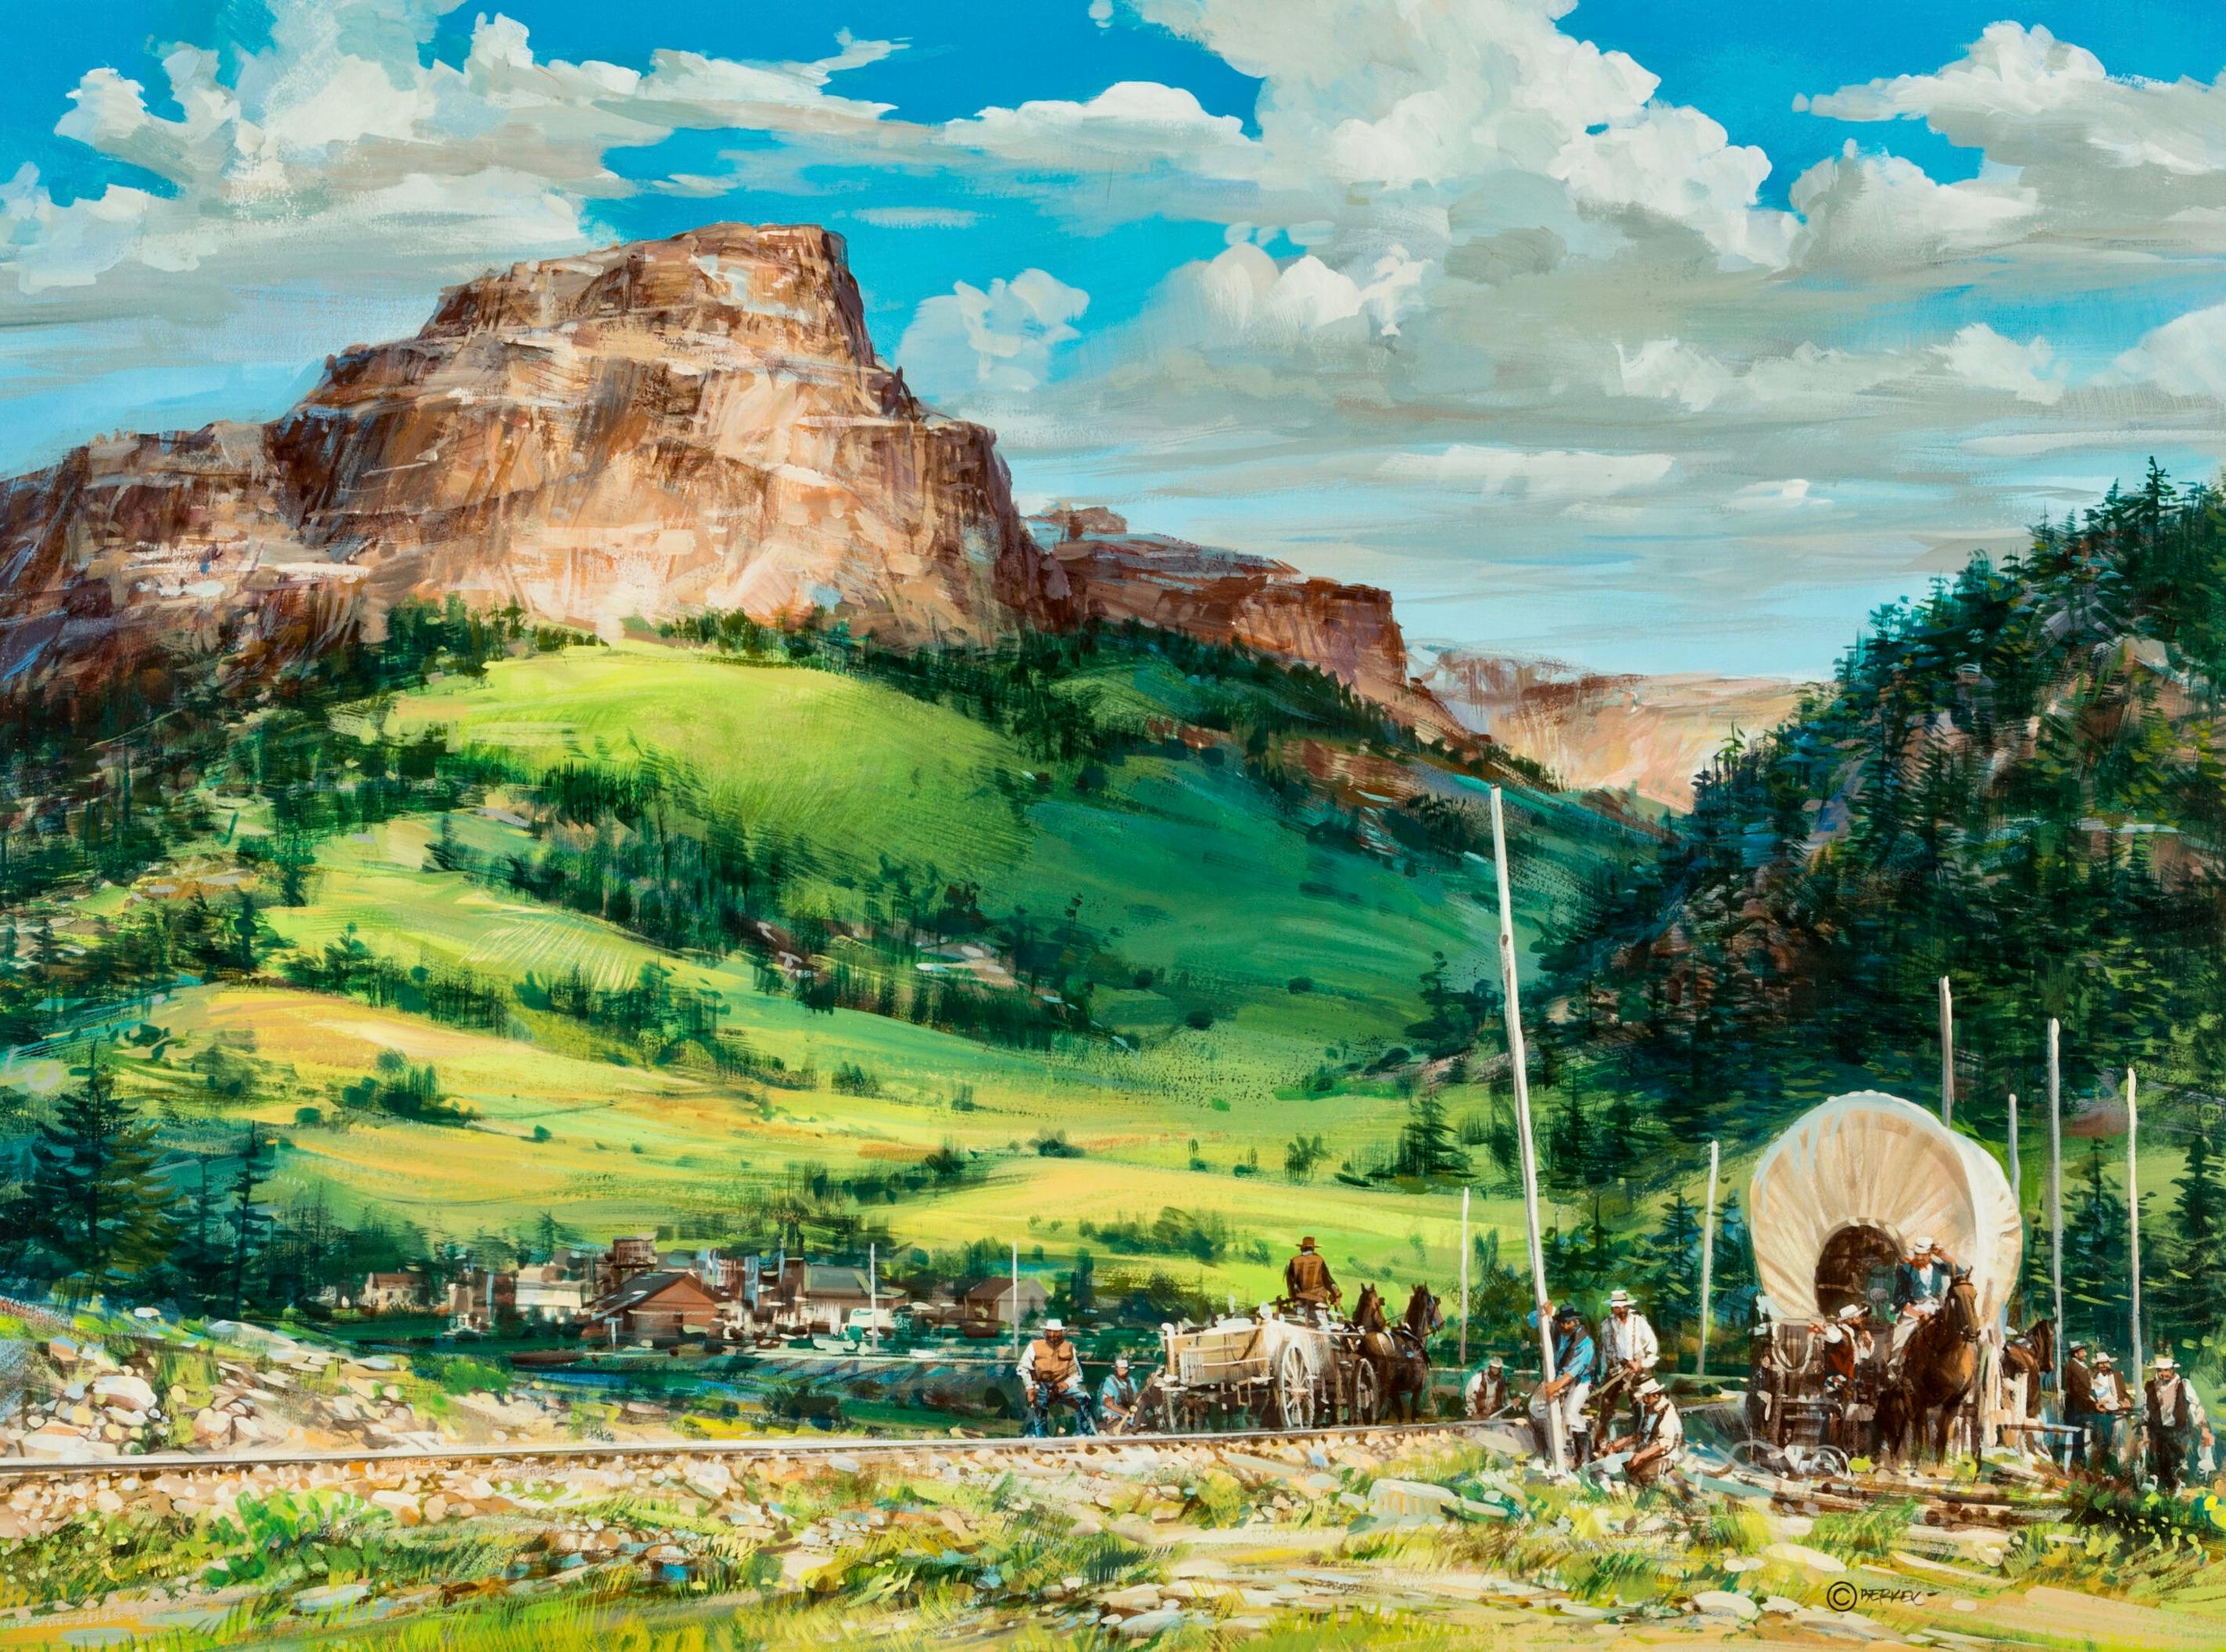 Wyoming Telegraph Road - Painting by John Berkey